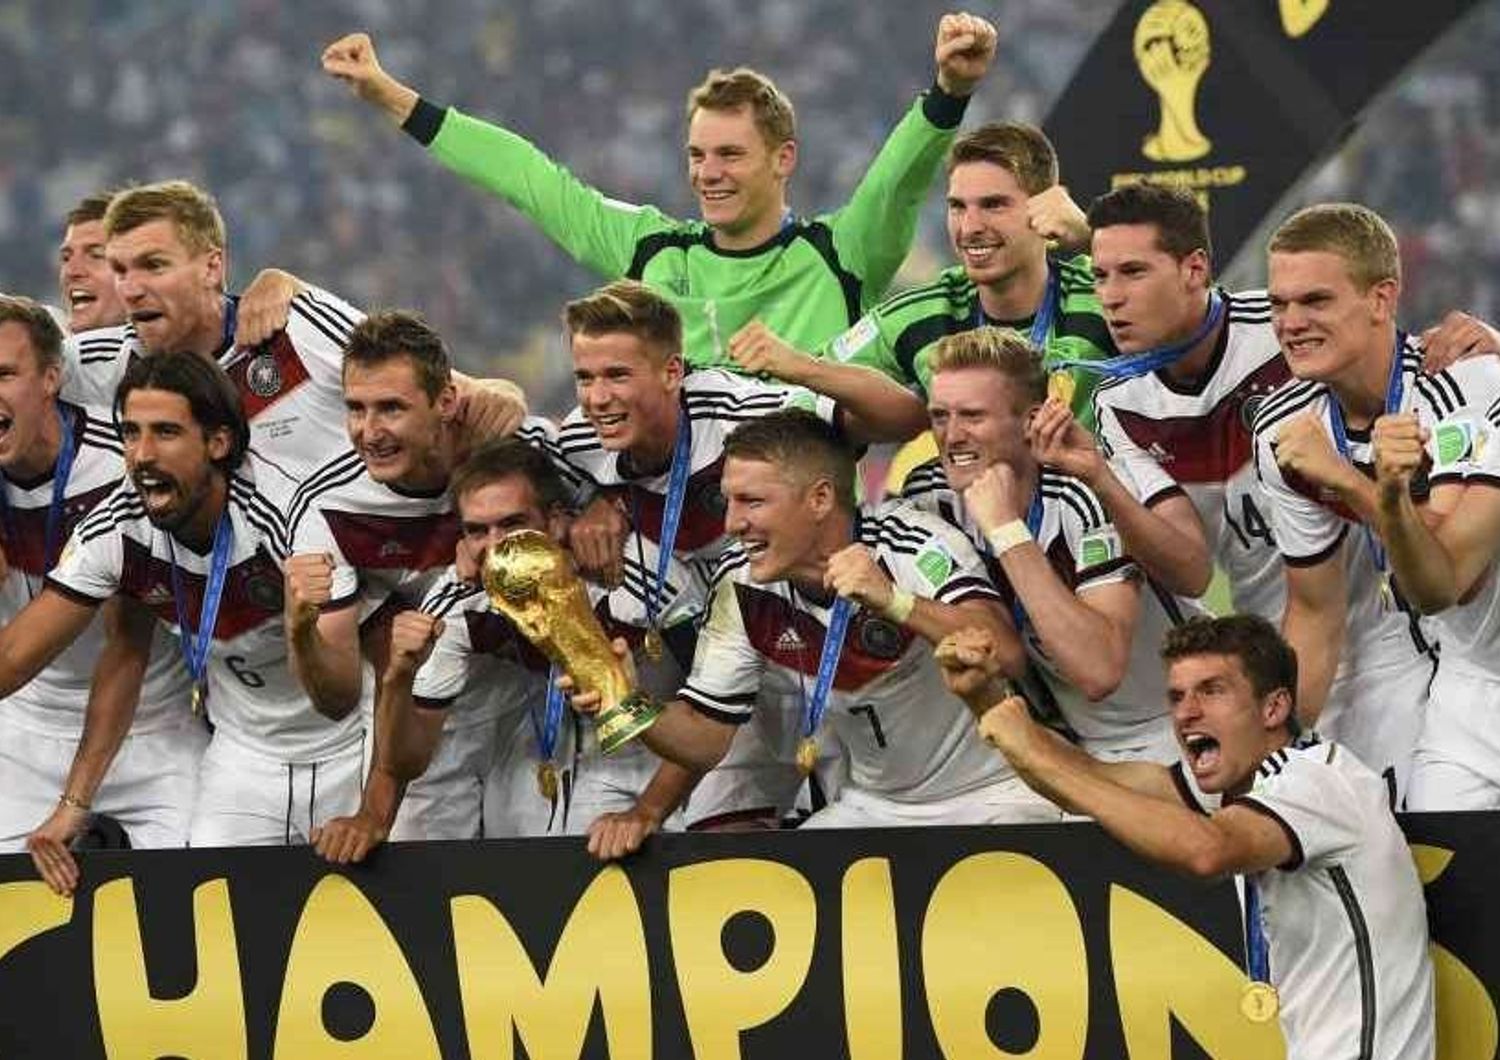 Germania campione per la quarta volta, 1-0 all'Argentina